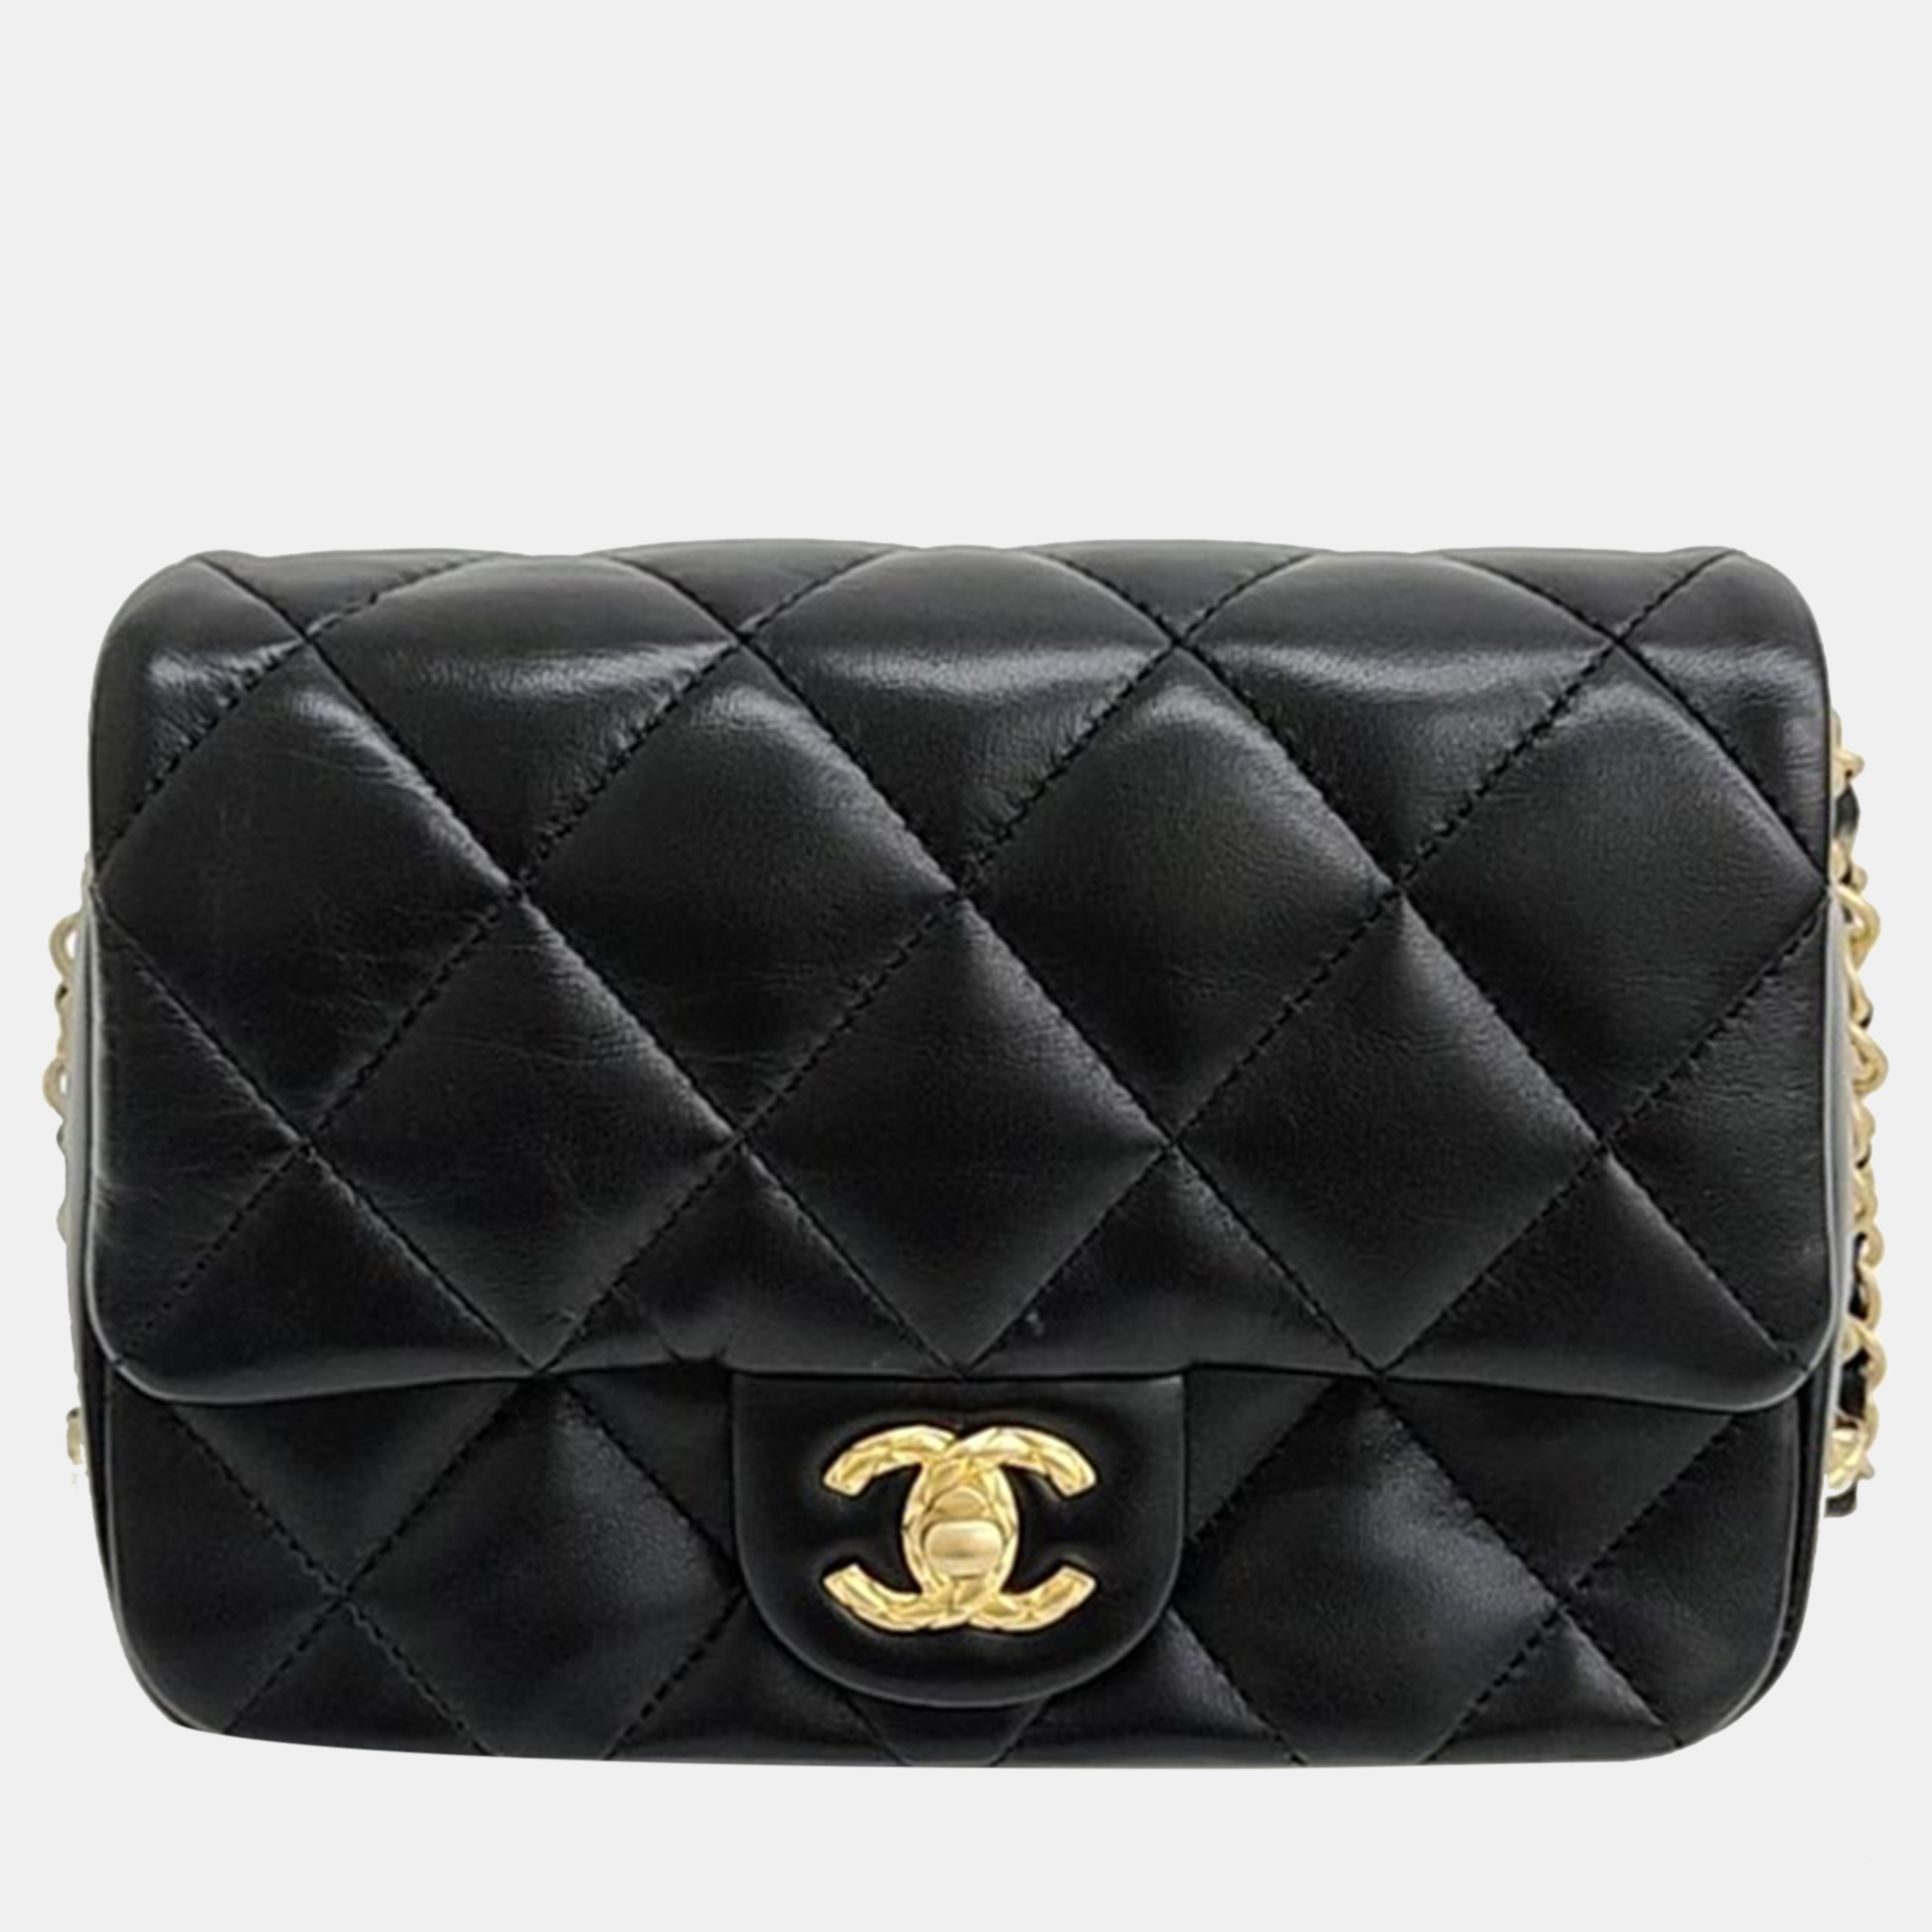 Chanel black lambskin leather chain crossbody bag